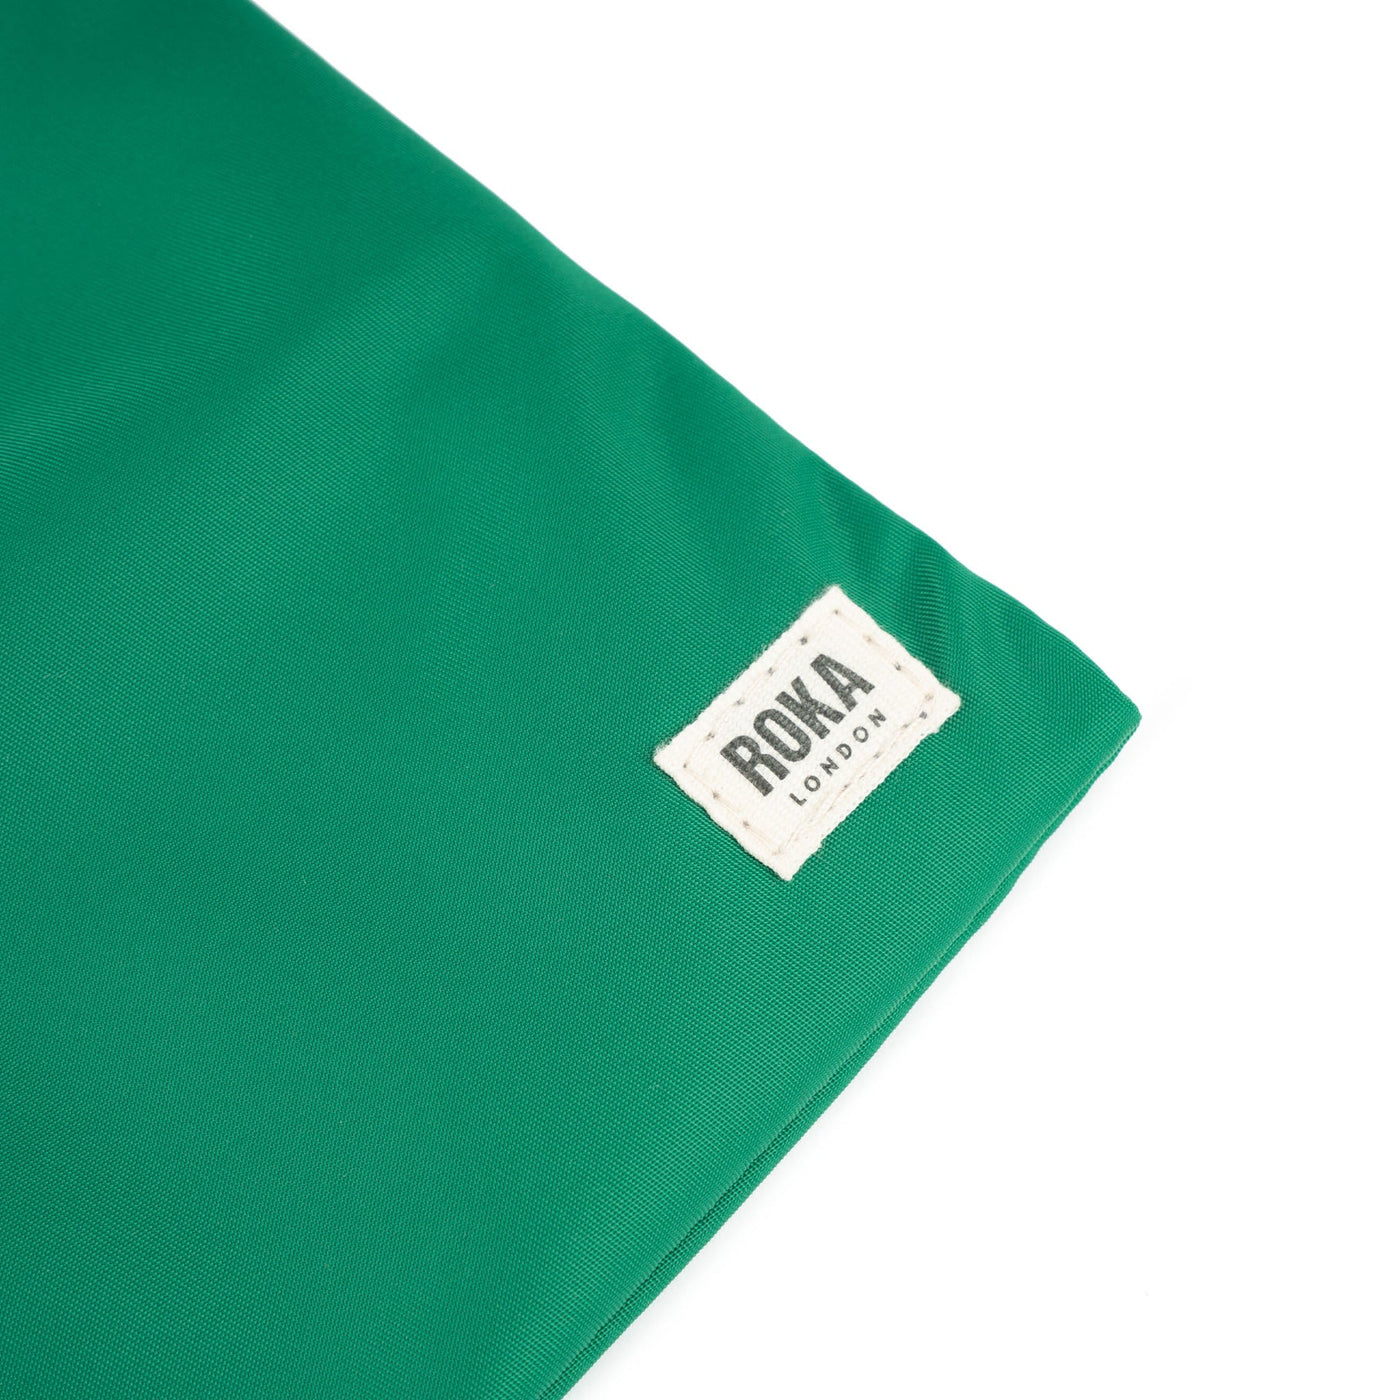 Roka Chelsea Crossbody Bag -Sustainable Nylon - Emerald